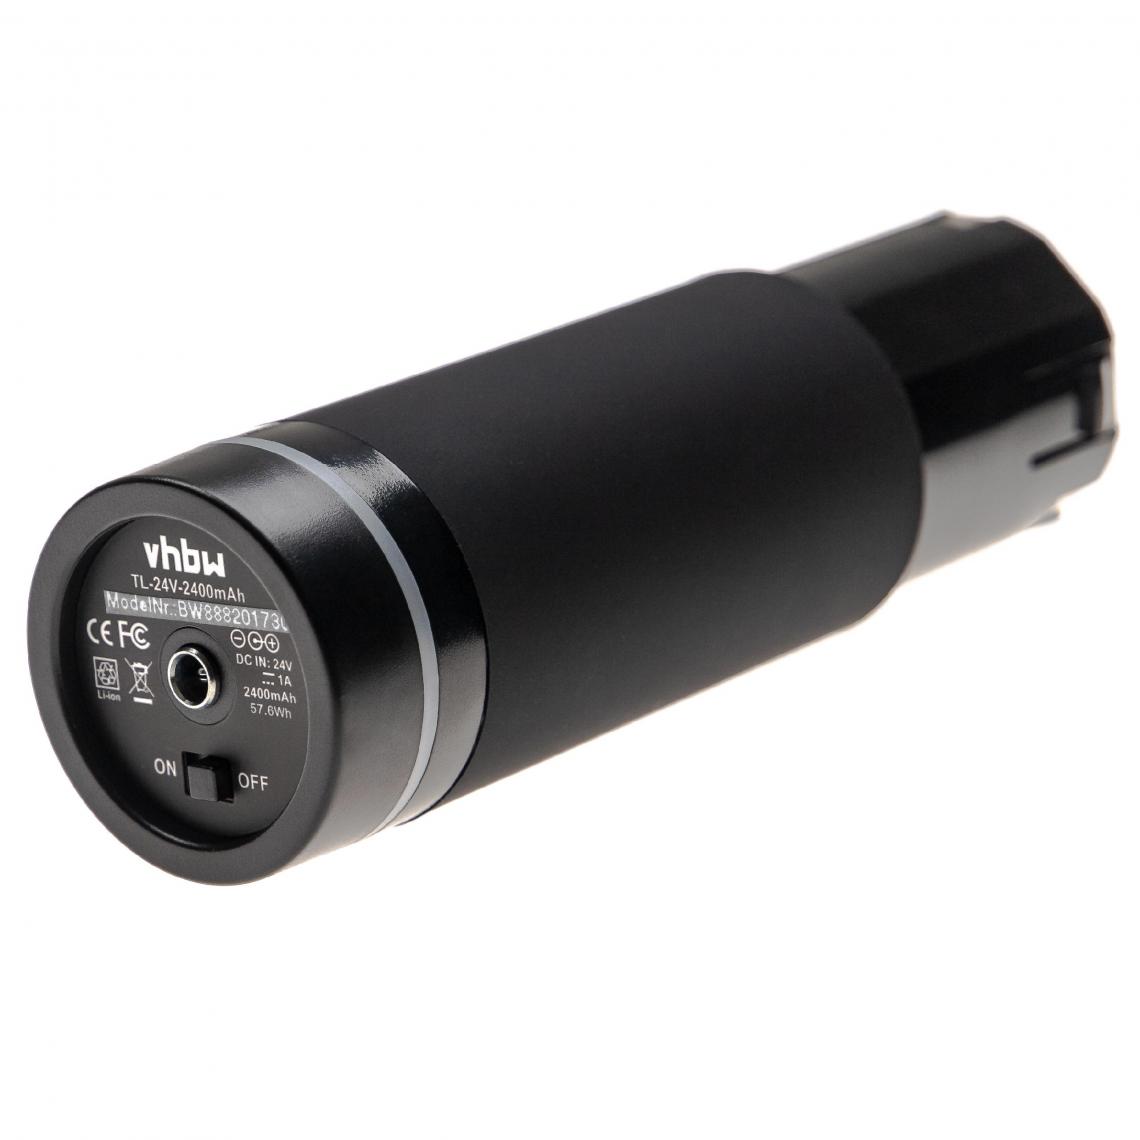 Vhbw - vhbw batterie compatible avec Hyperice Hypervolt pistolet de massage, massage gun (2400mAh, 24V, Li-ion) - Autre appareil de mesure